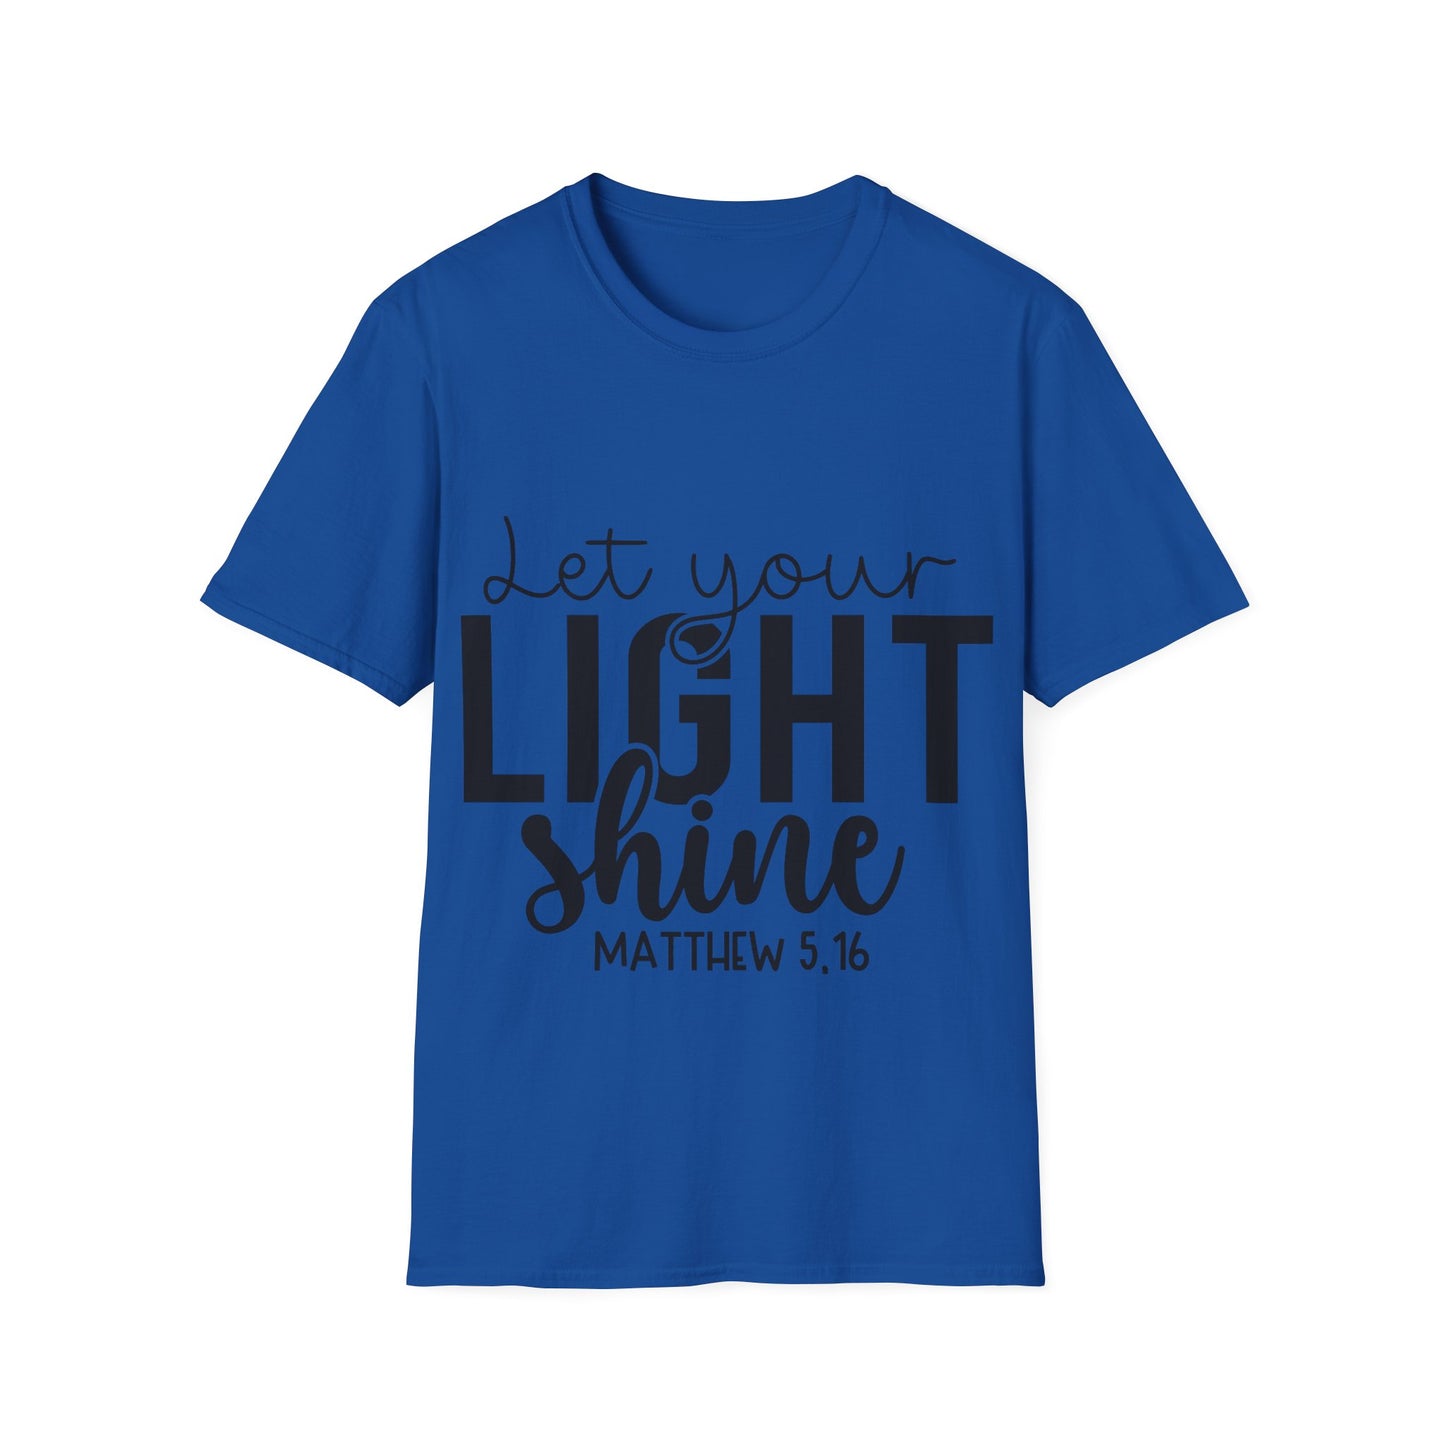 Let Your Light Shine Matthew 5,16 (2) Triple Viking T-Shirt